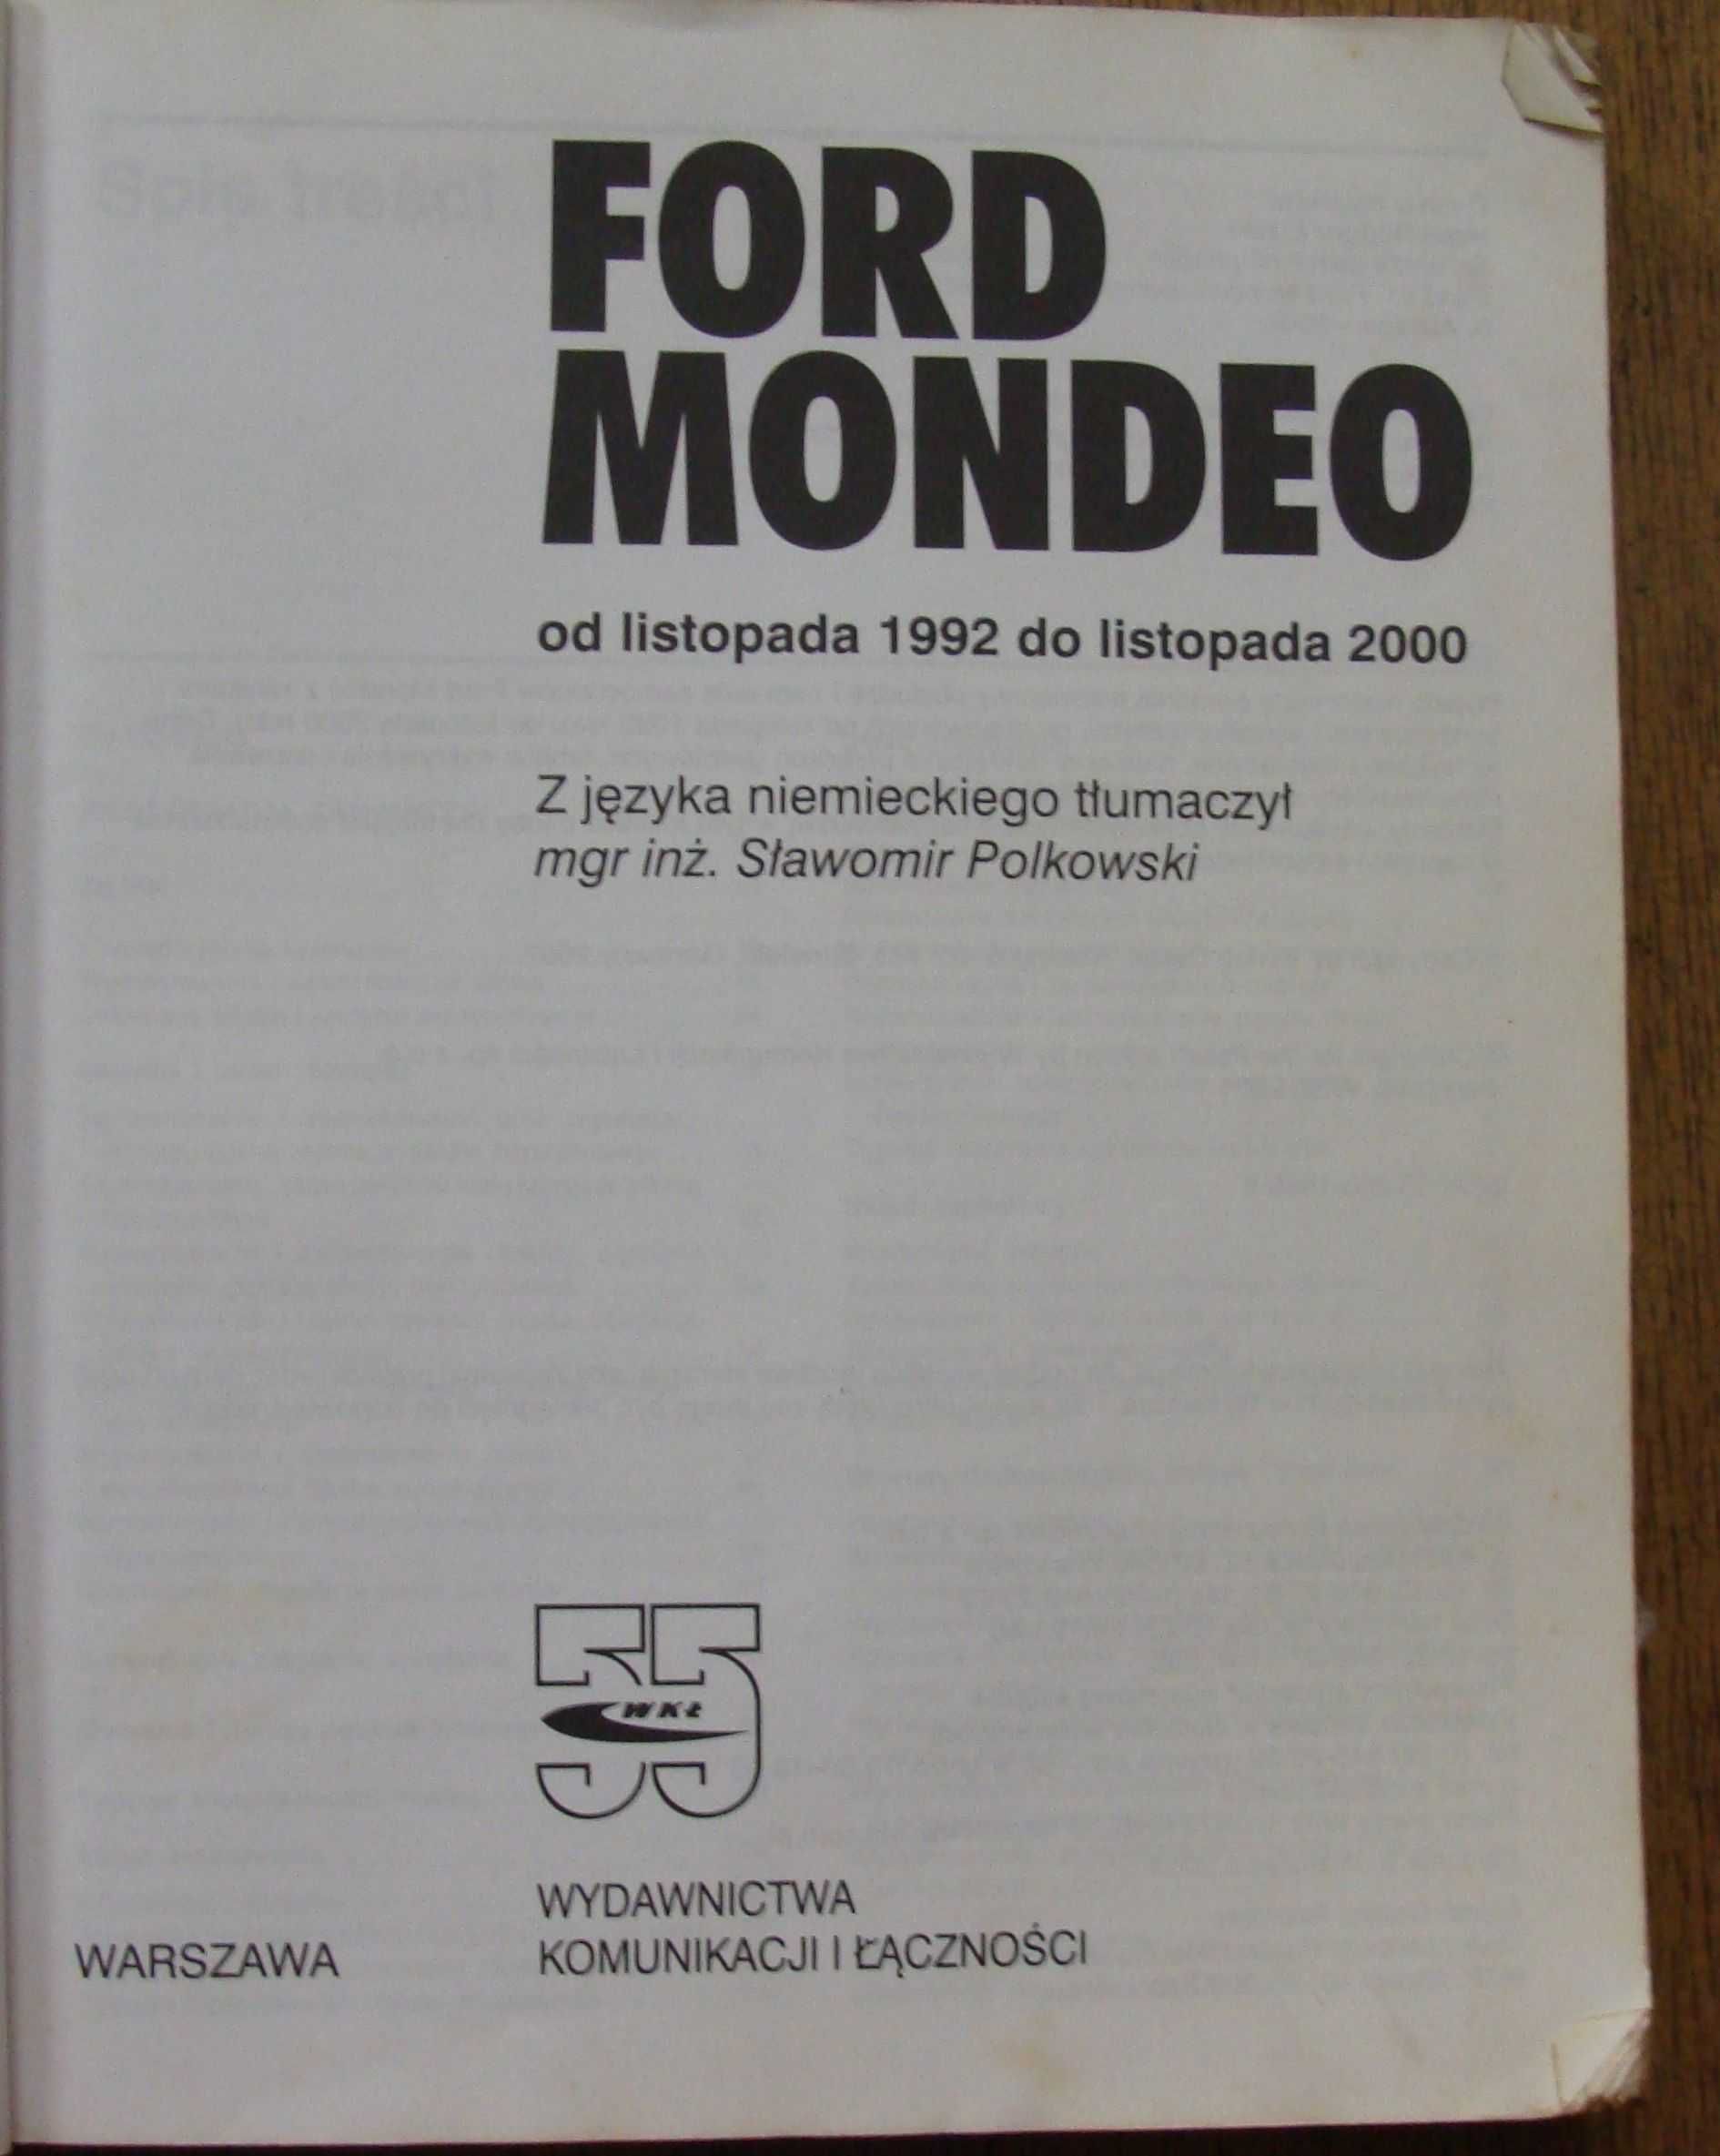 Książka " Sam naprawiam Ford mondeo"